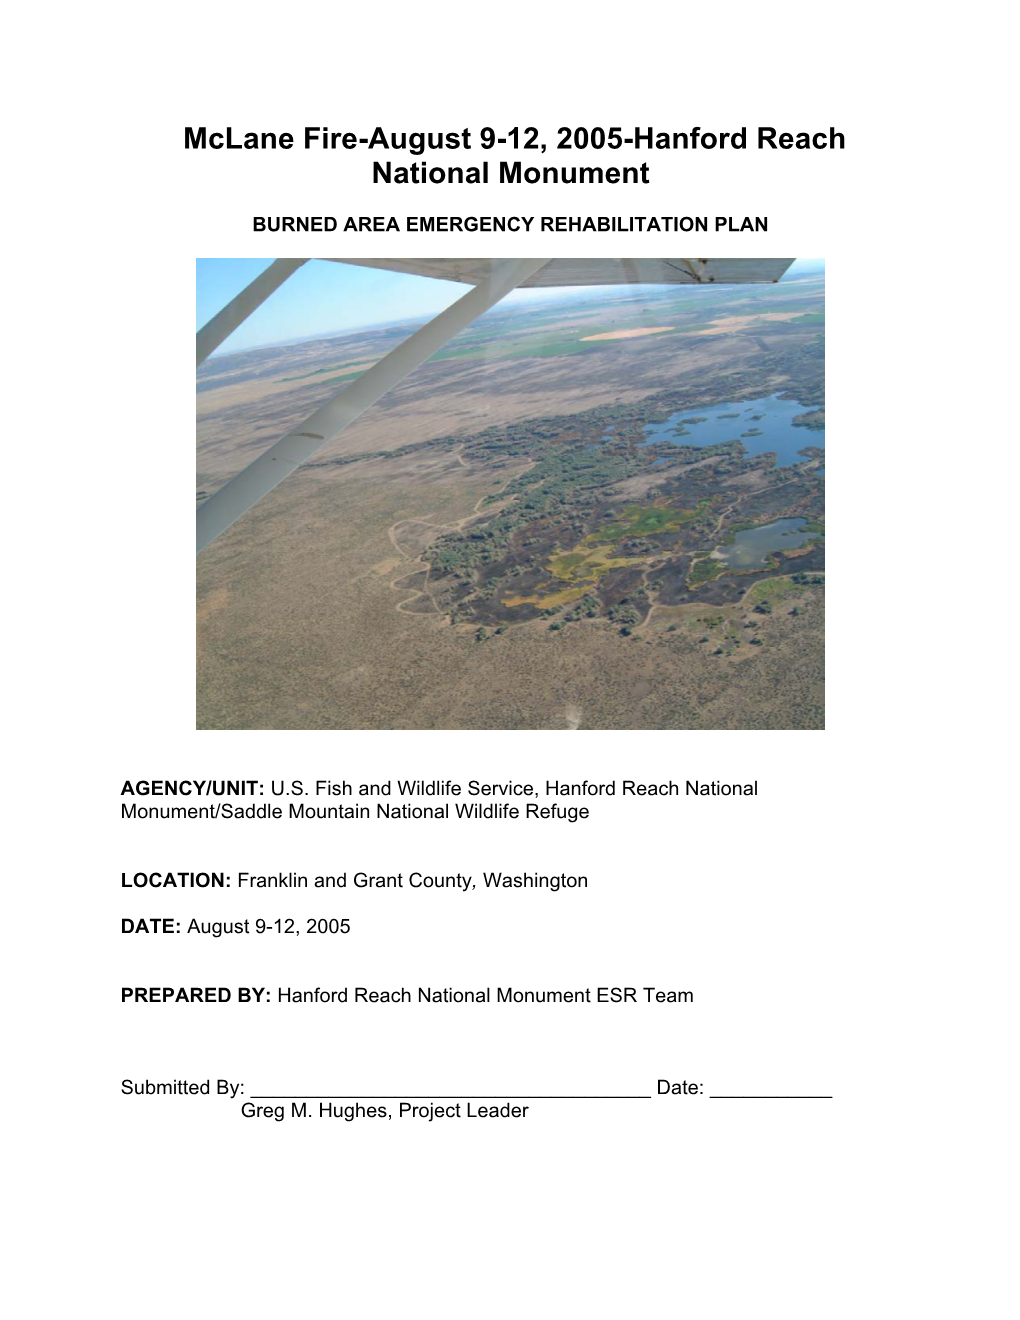 Mclane Fire-August 9-12, 2005-Hanford Reach National Monument